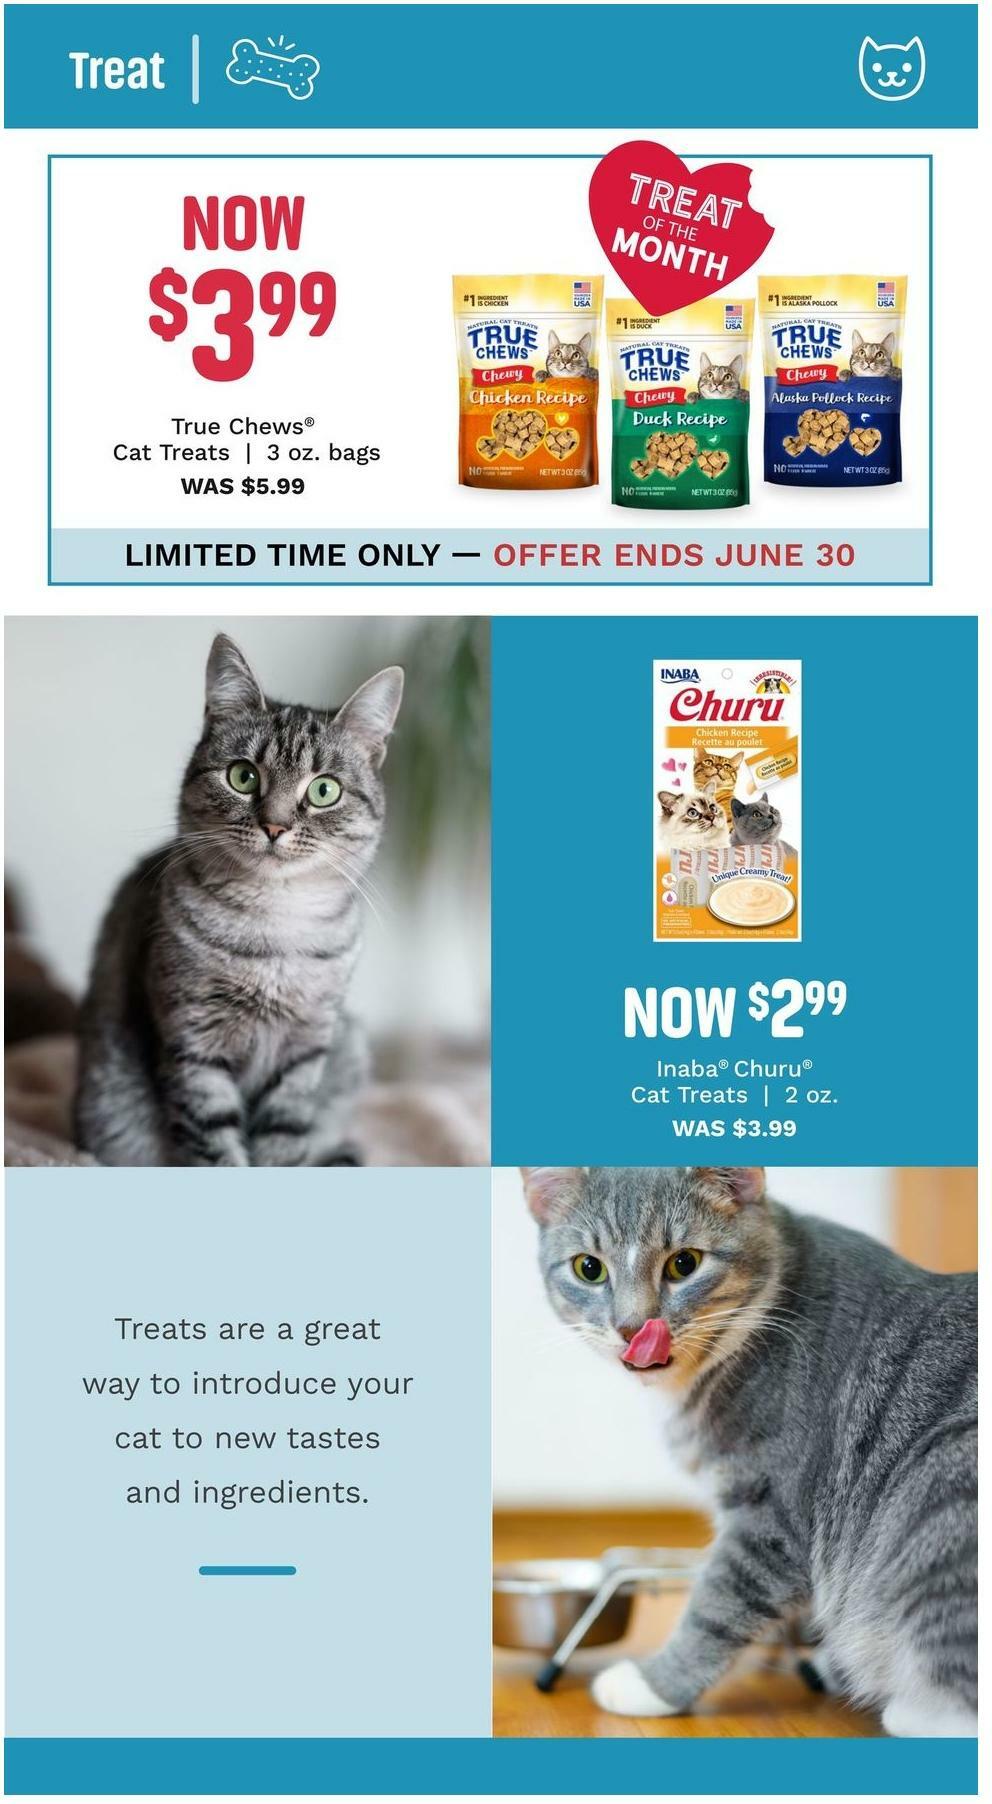 Pet Supermarket Cat Savings Weekly Ad from June 1